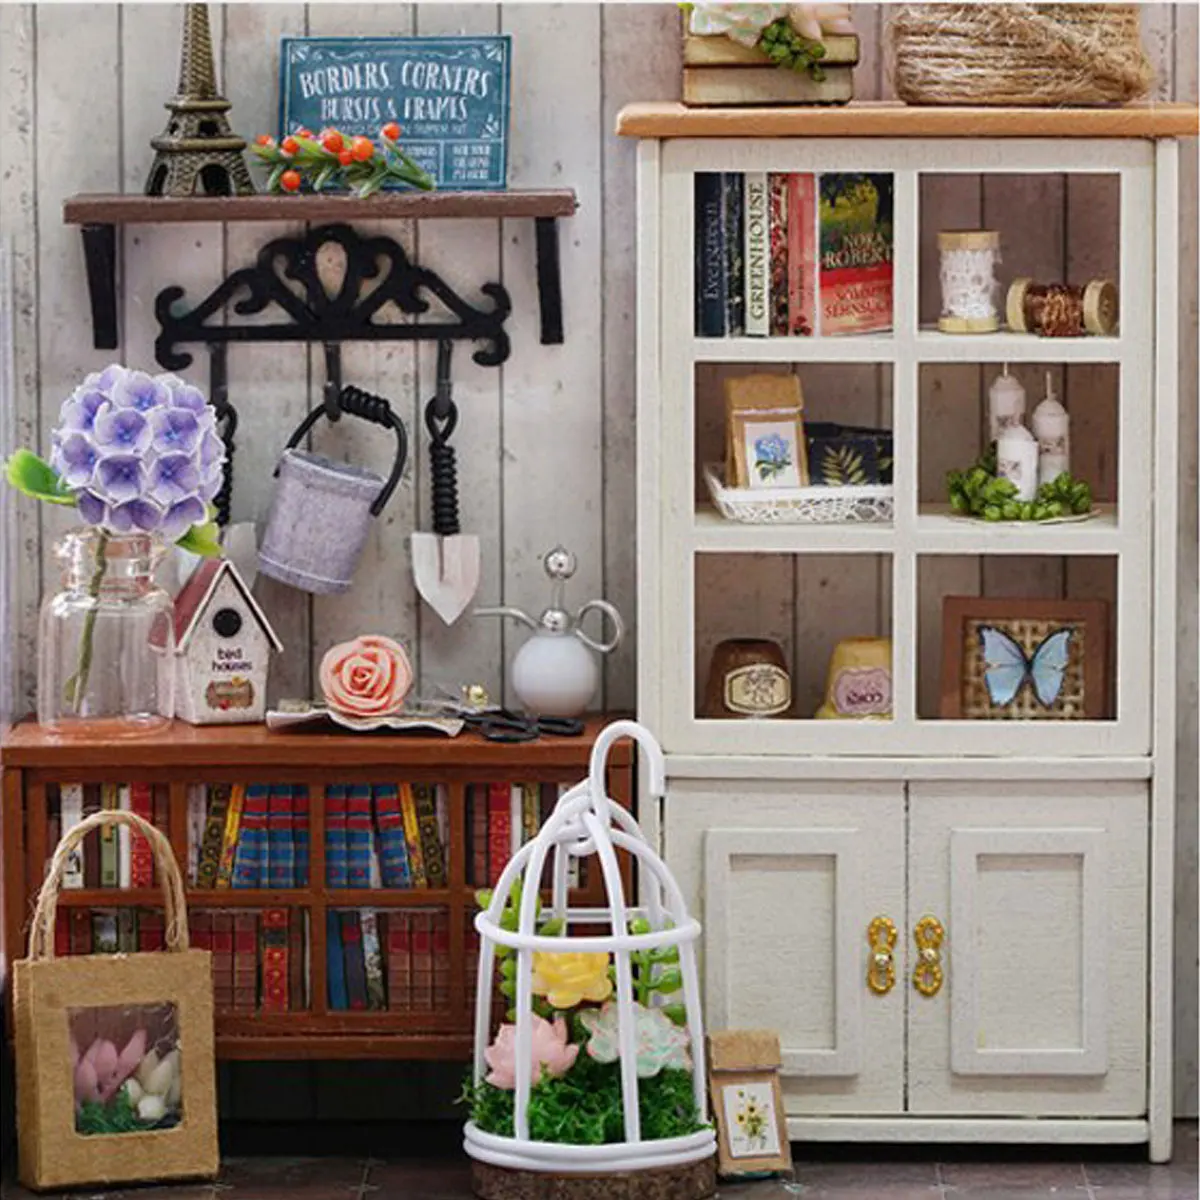 LBLA Cuteroom DIY Dollhouse Provence Wooden LED Miniature Furniture Flower House Kit for Kids Birthday Christmas Gift